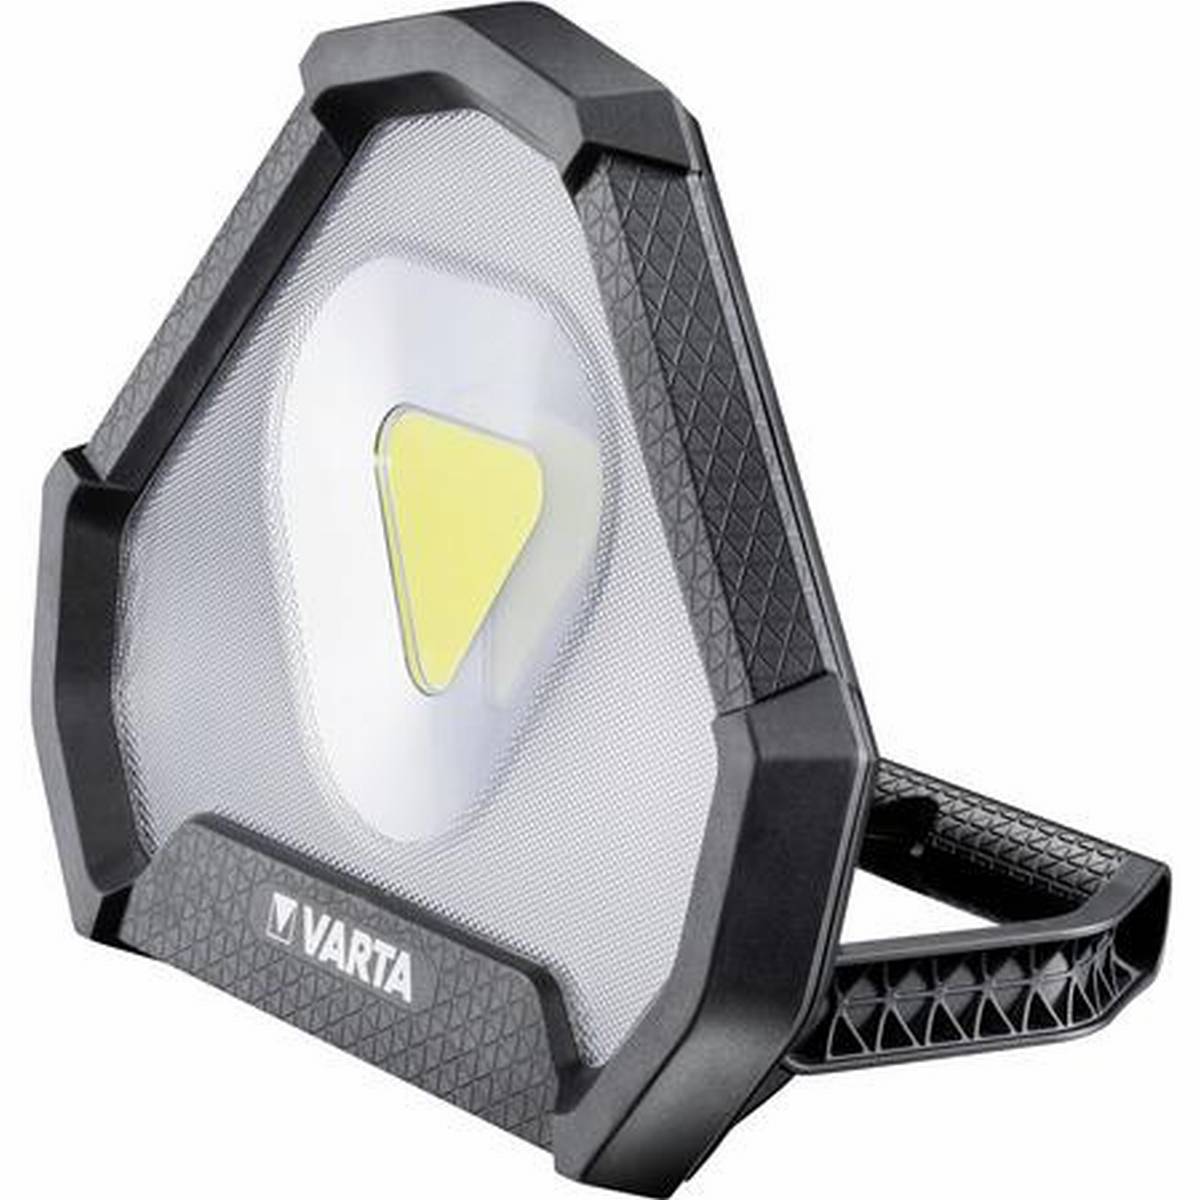 Varta Work Flex Stadium Light incl. 3AAA Work Light Battery Spotlight 12W 1450lm